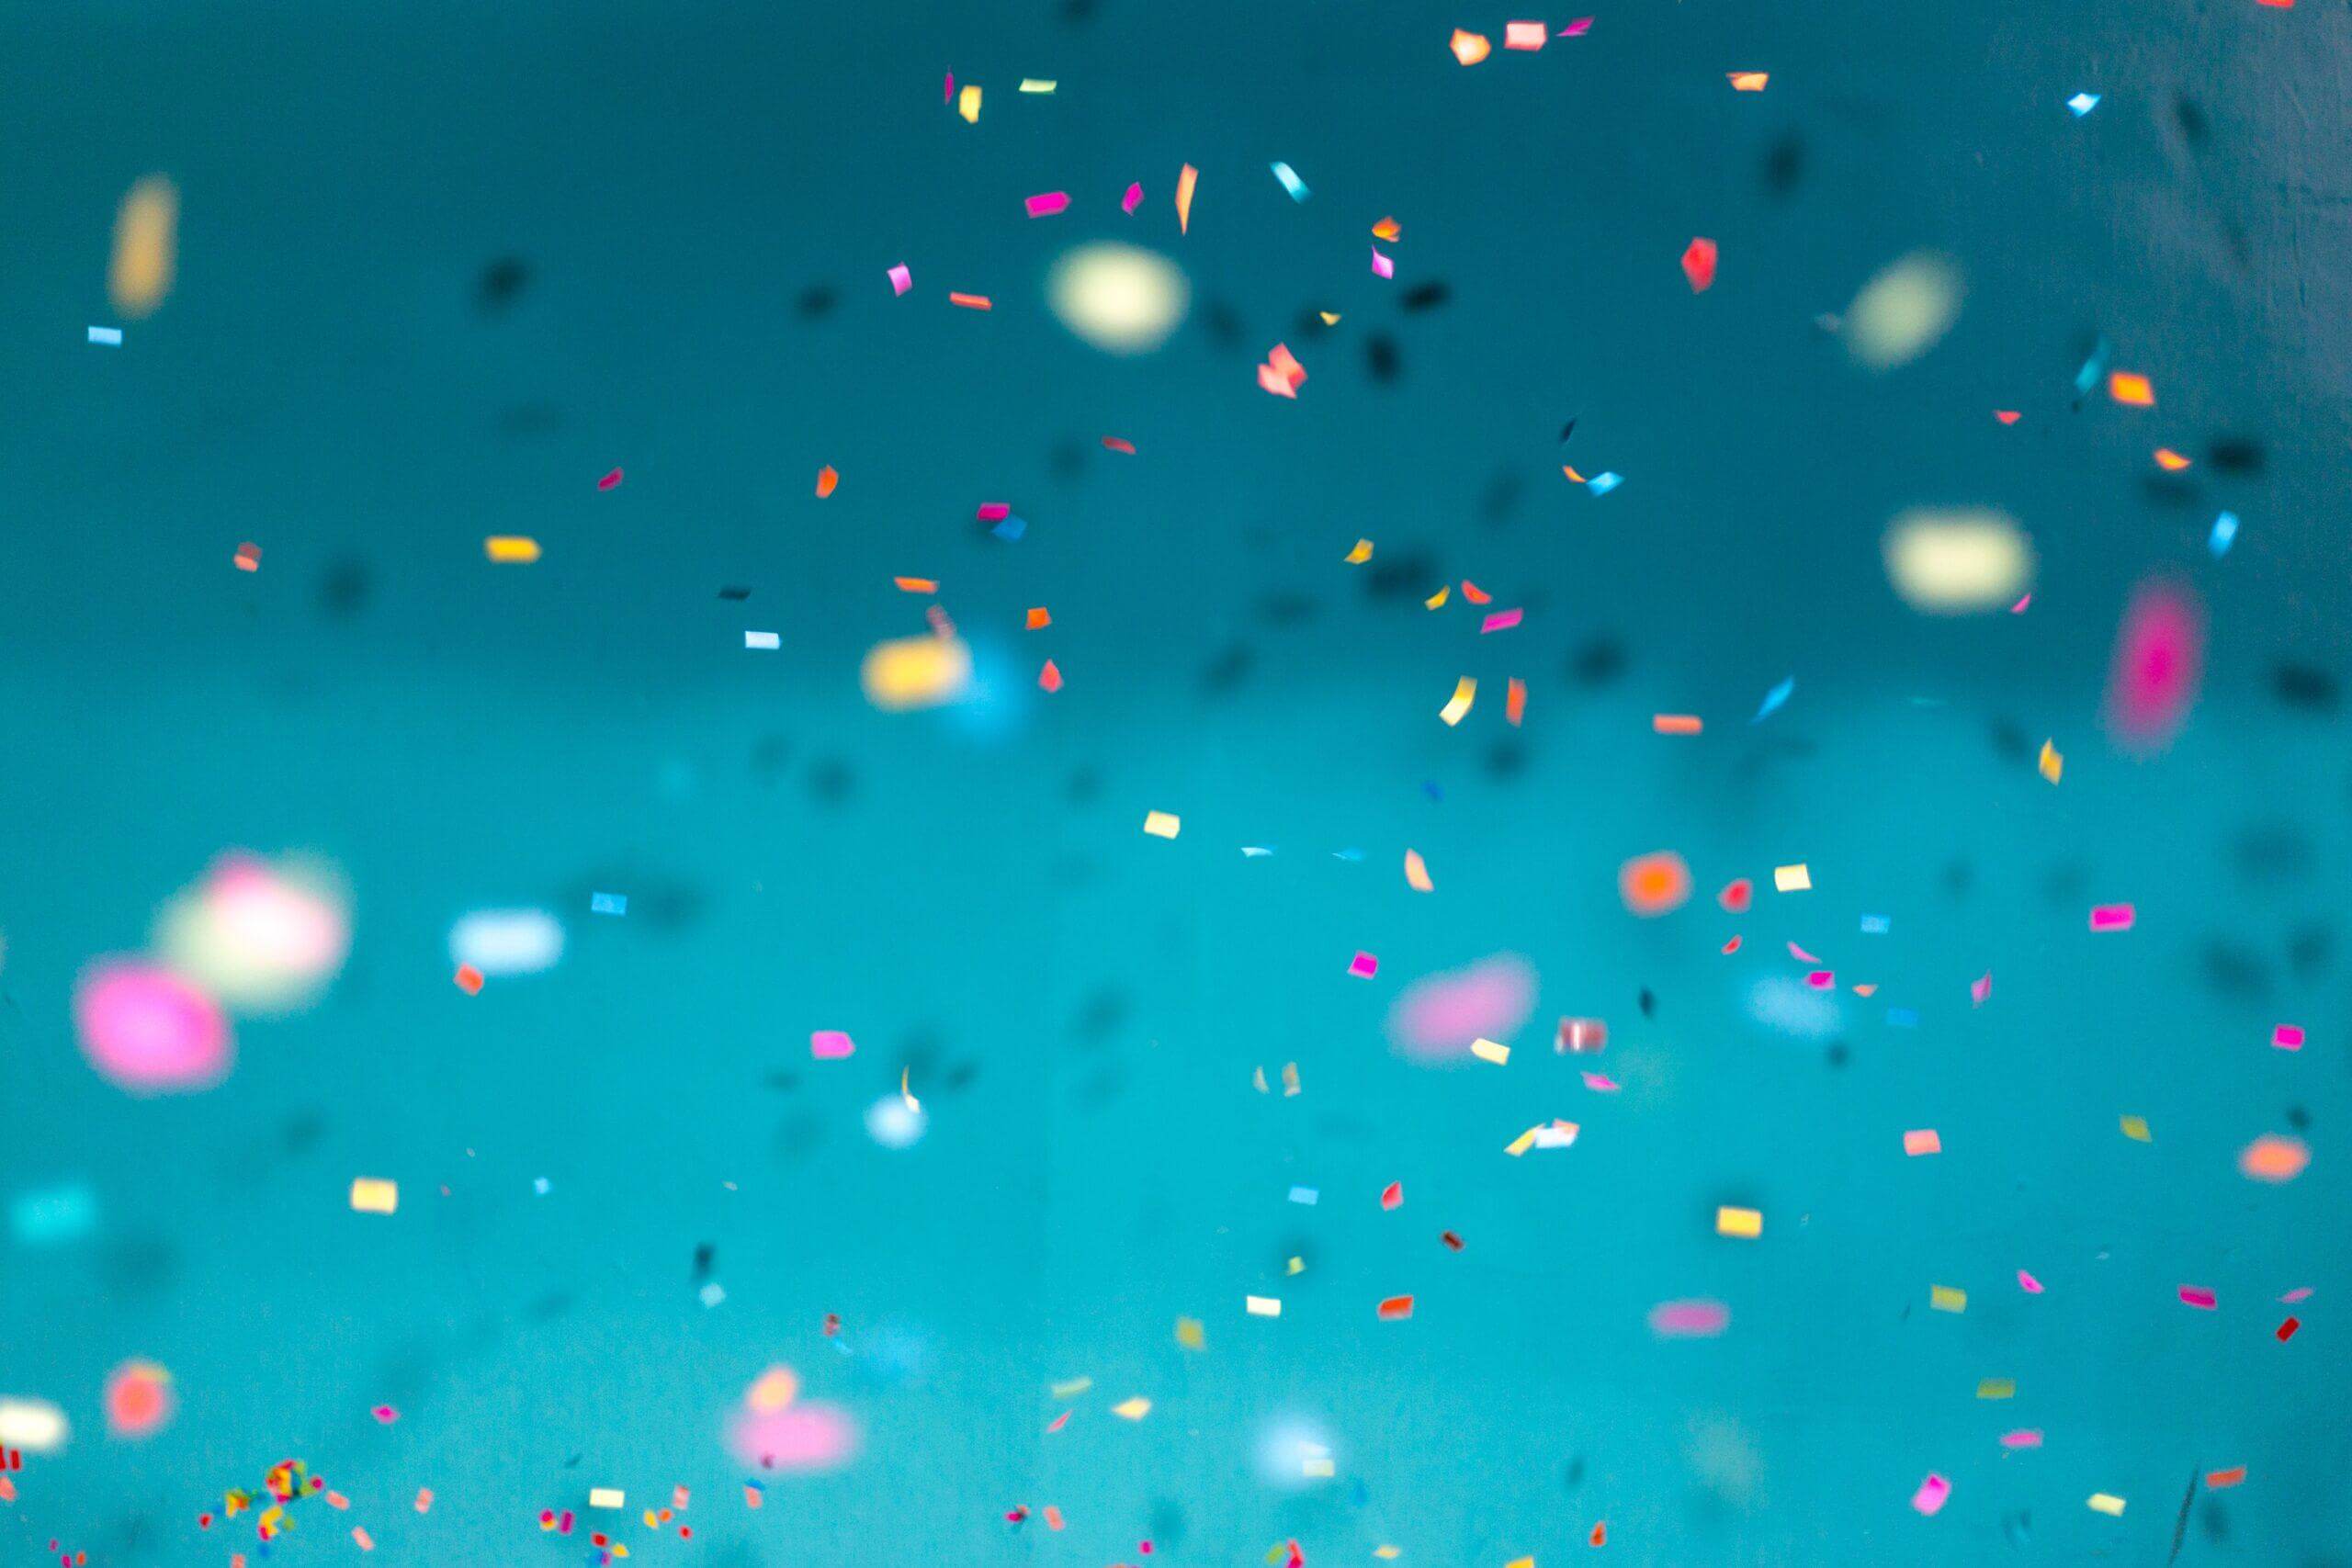 Confetti falling on a blue background.